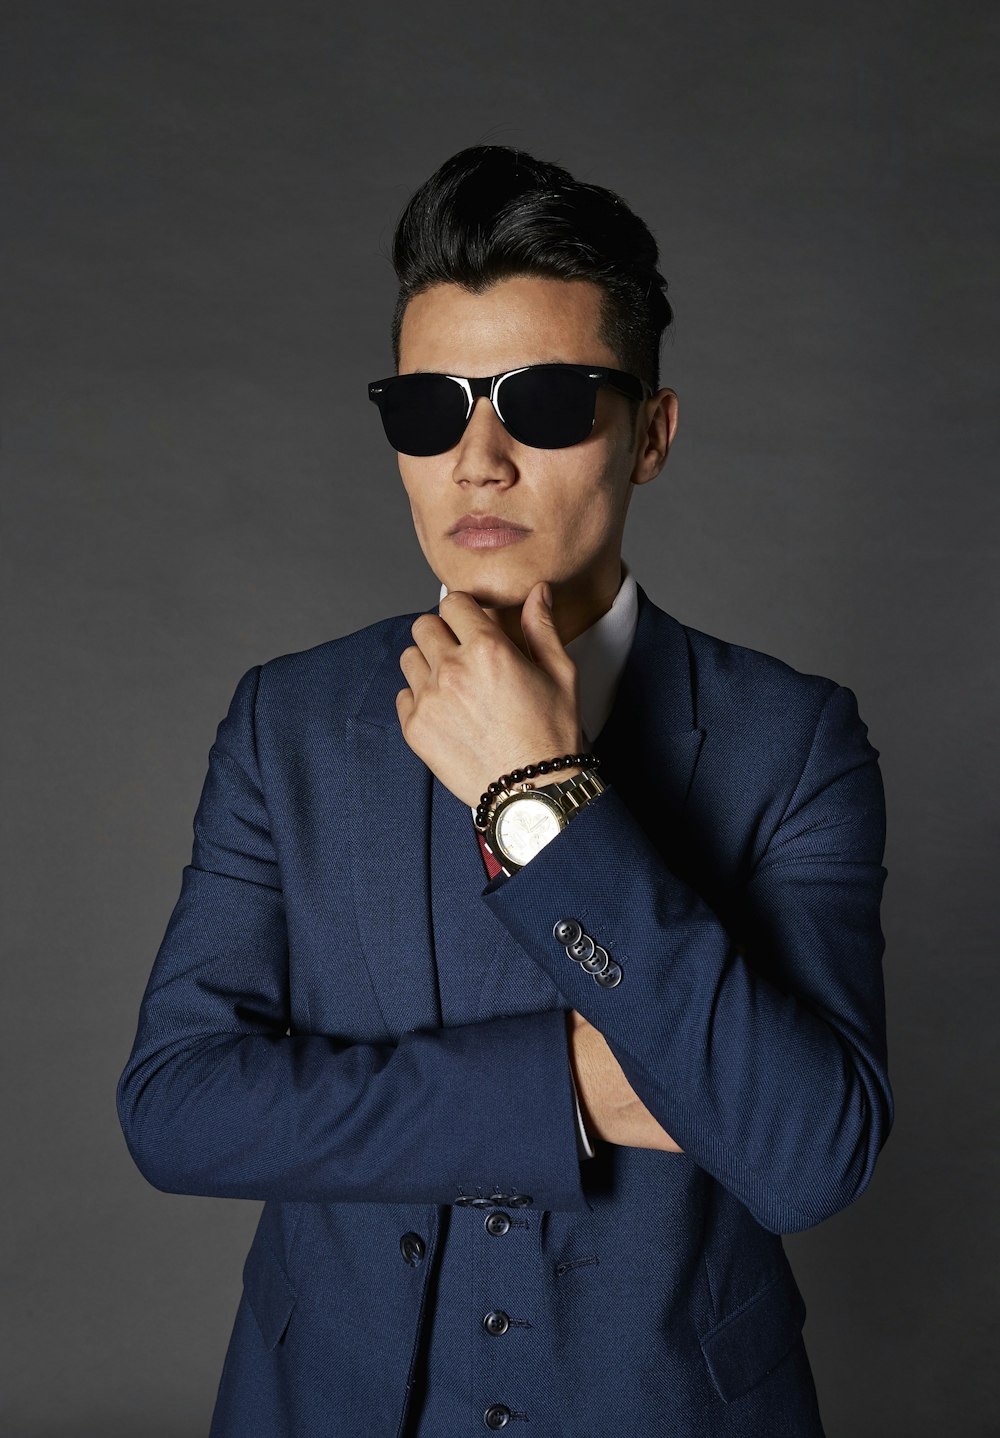 man in blue suit wearing black sunglasses